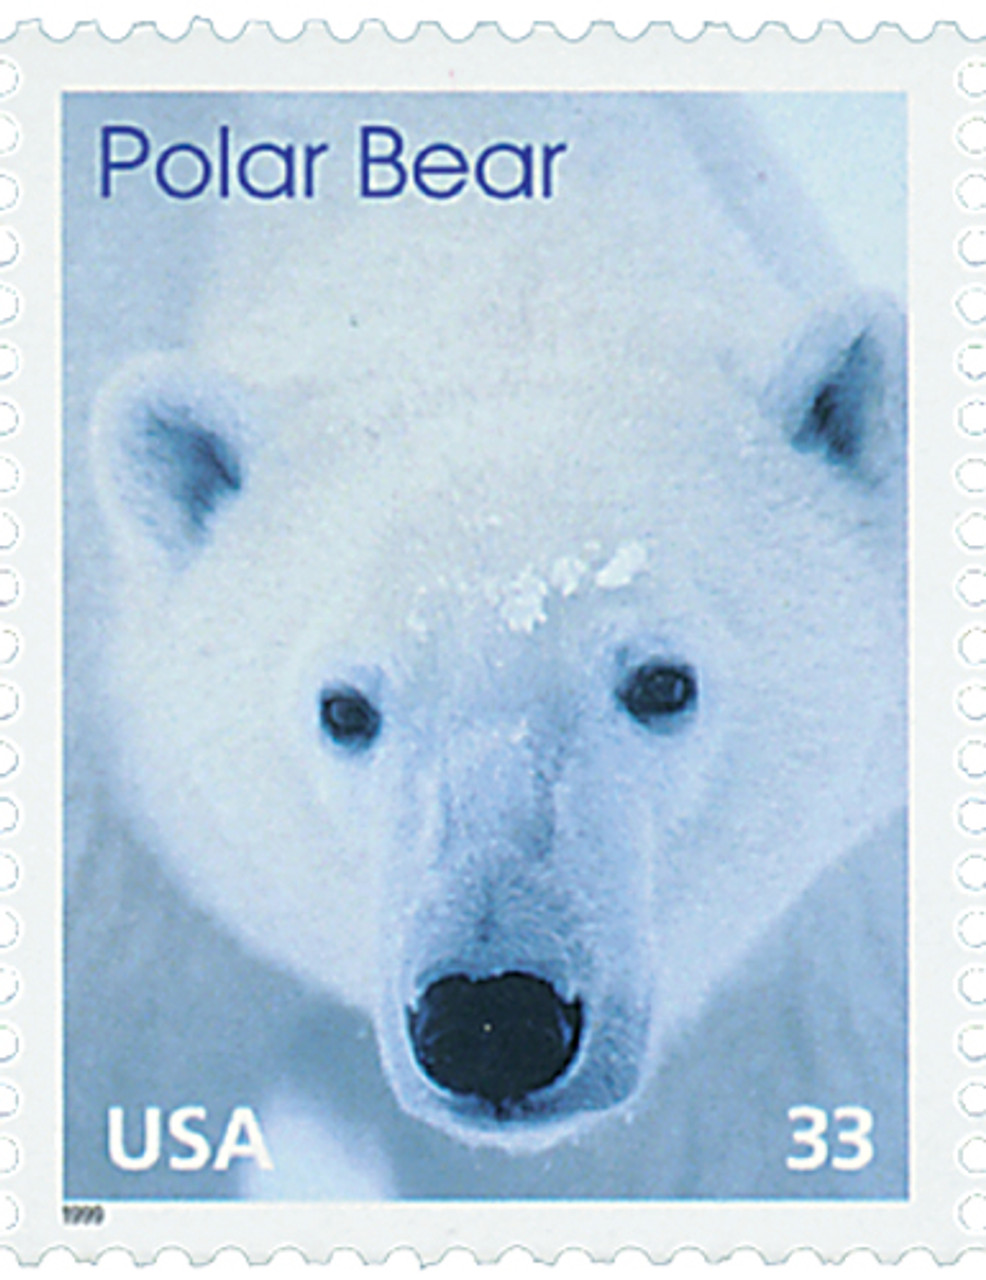 Hibernate Stamps